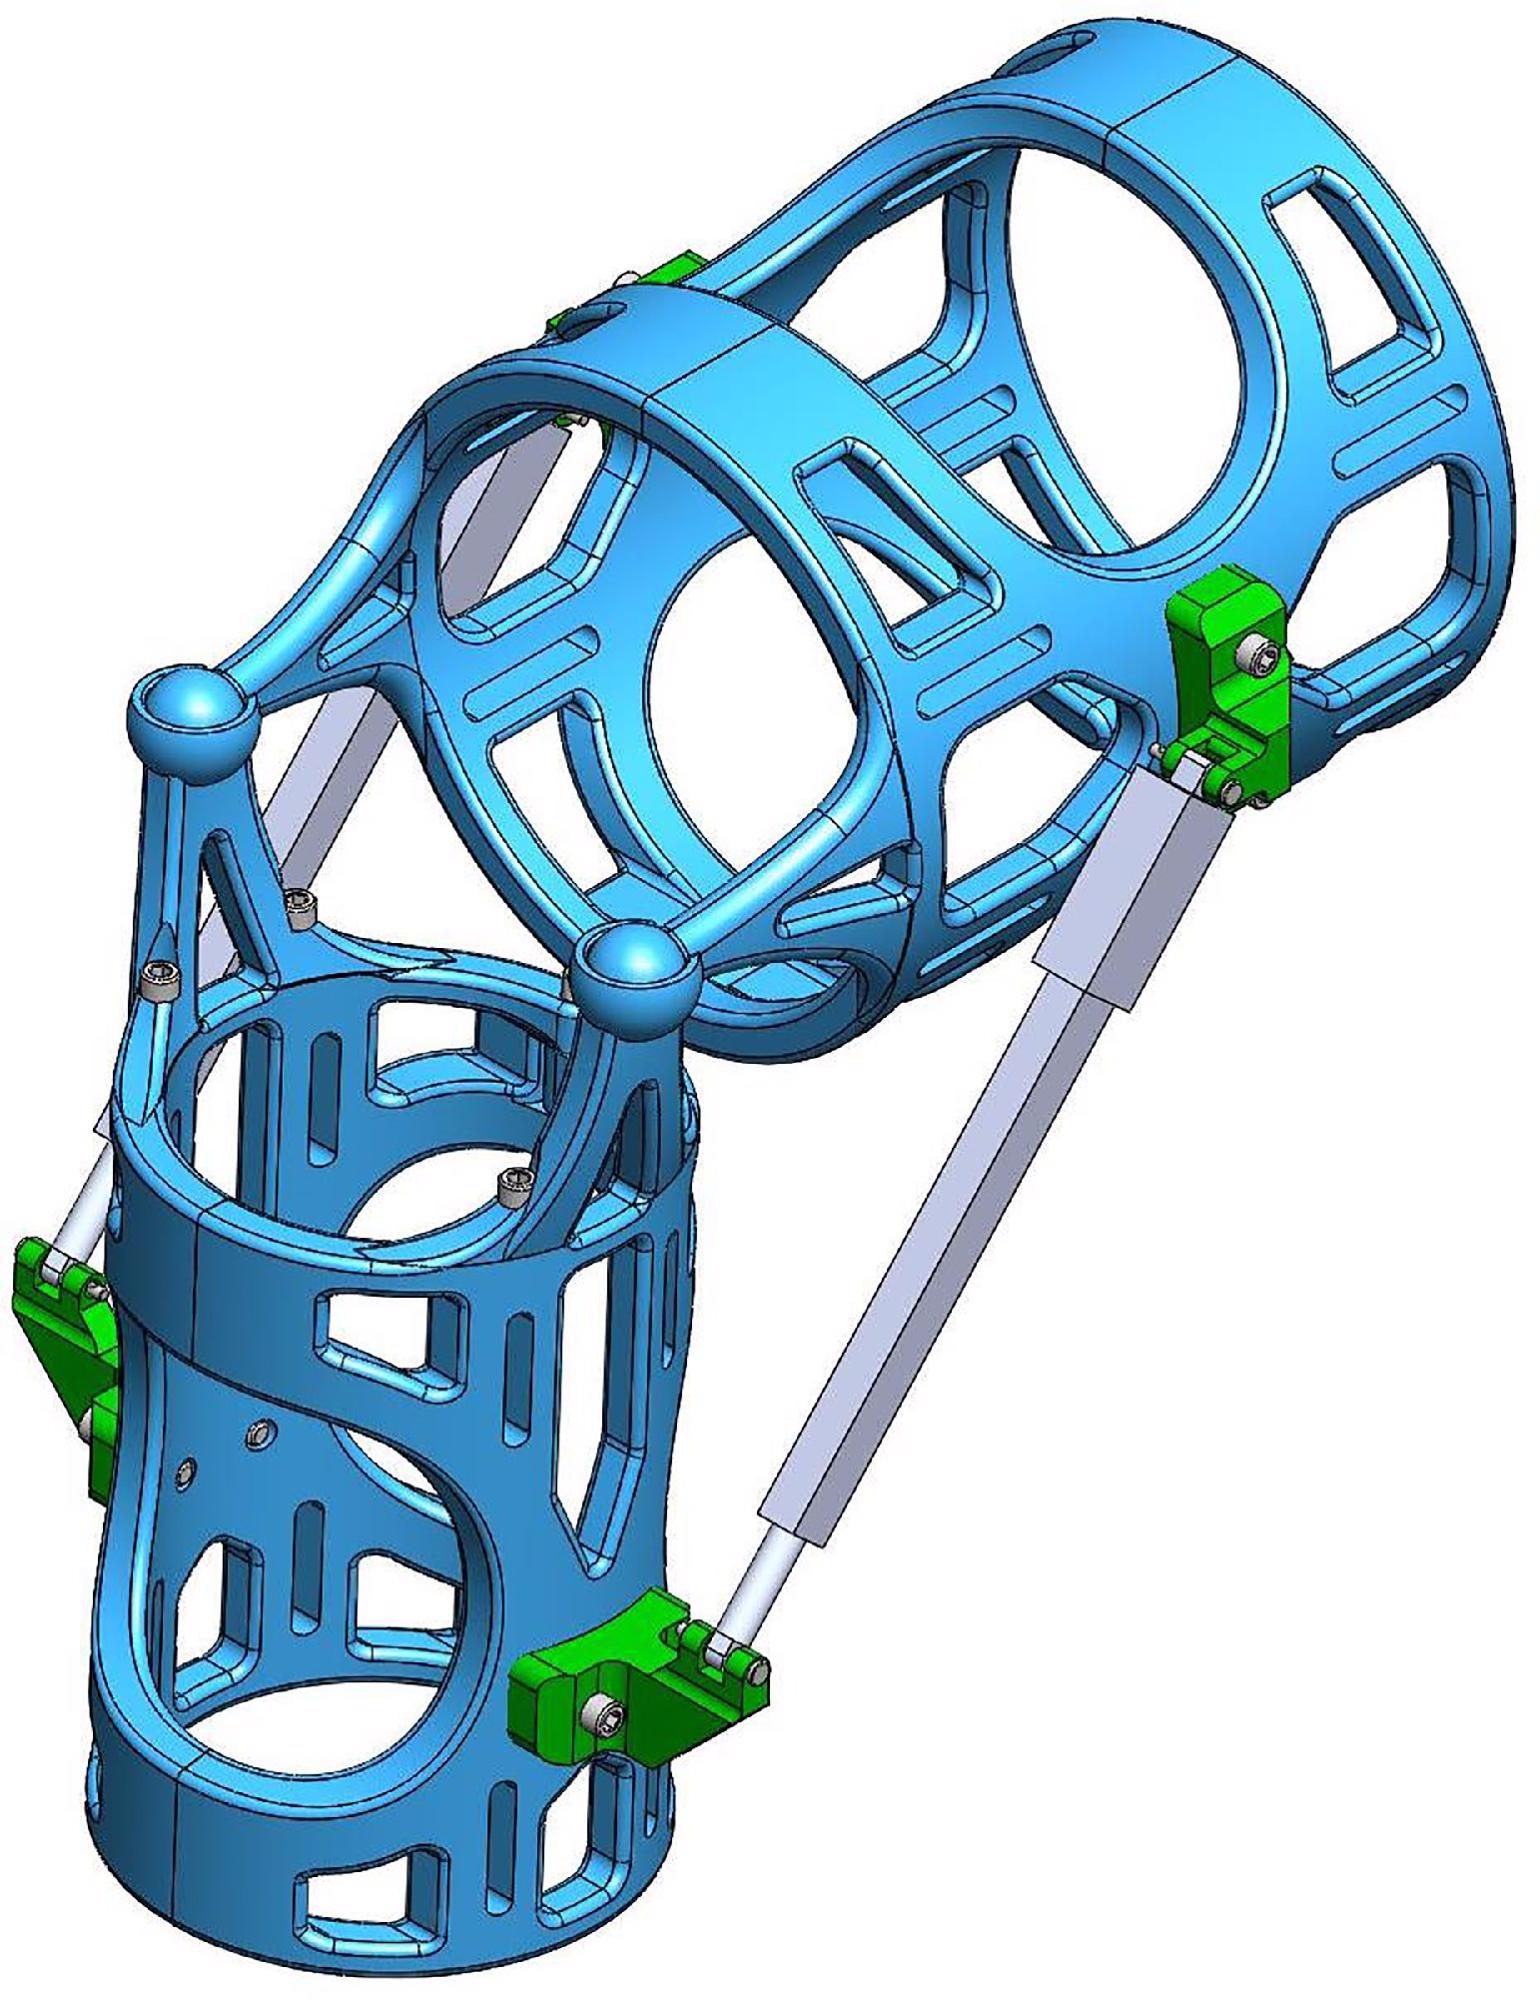 CAD image detailing the brace frame structure.